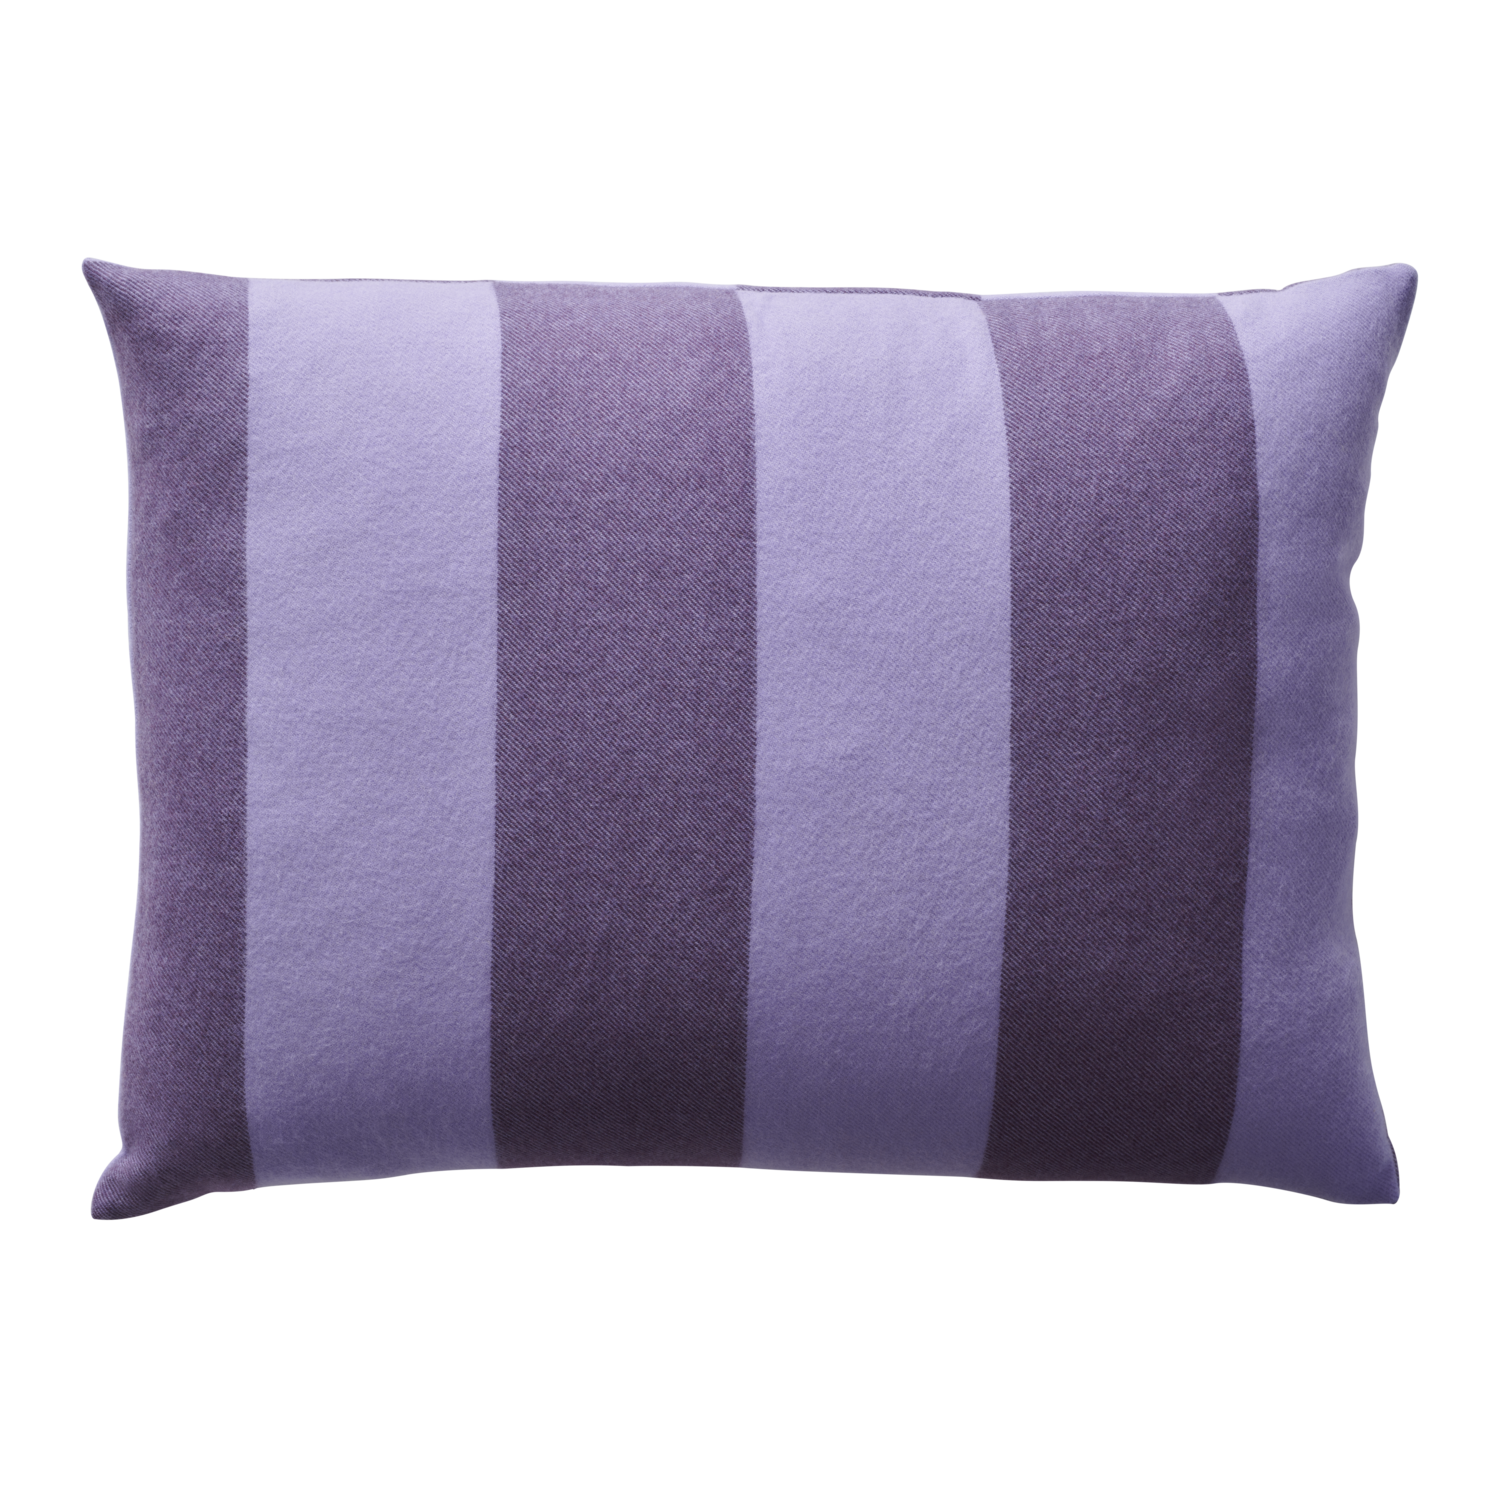 The Polychrome Pillow -  Lavender / Purple